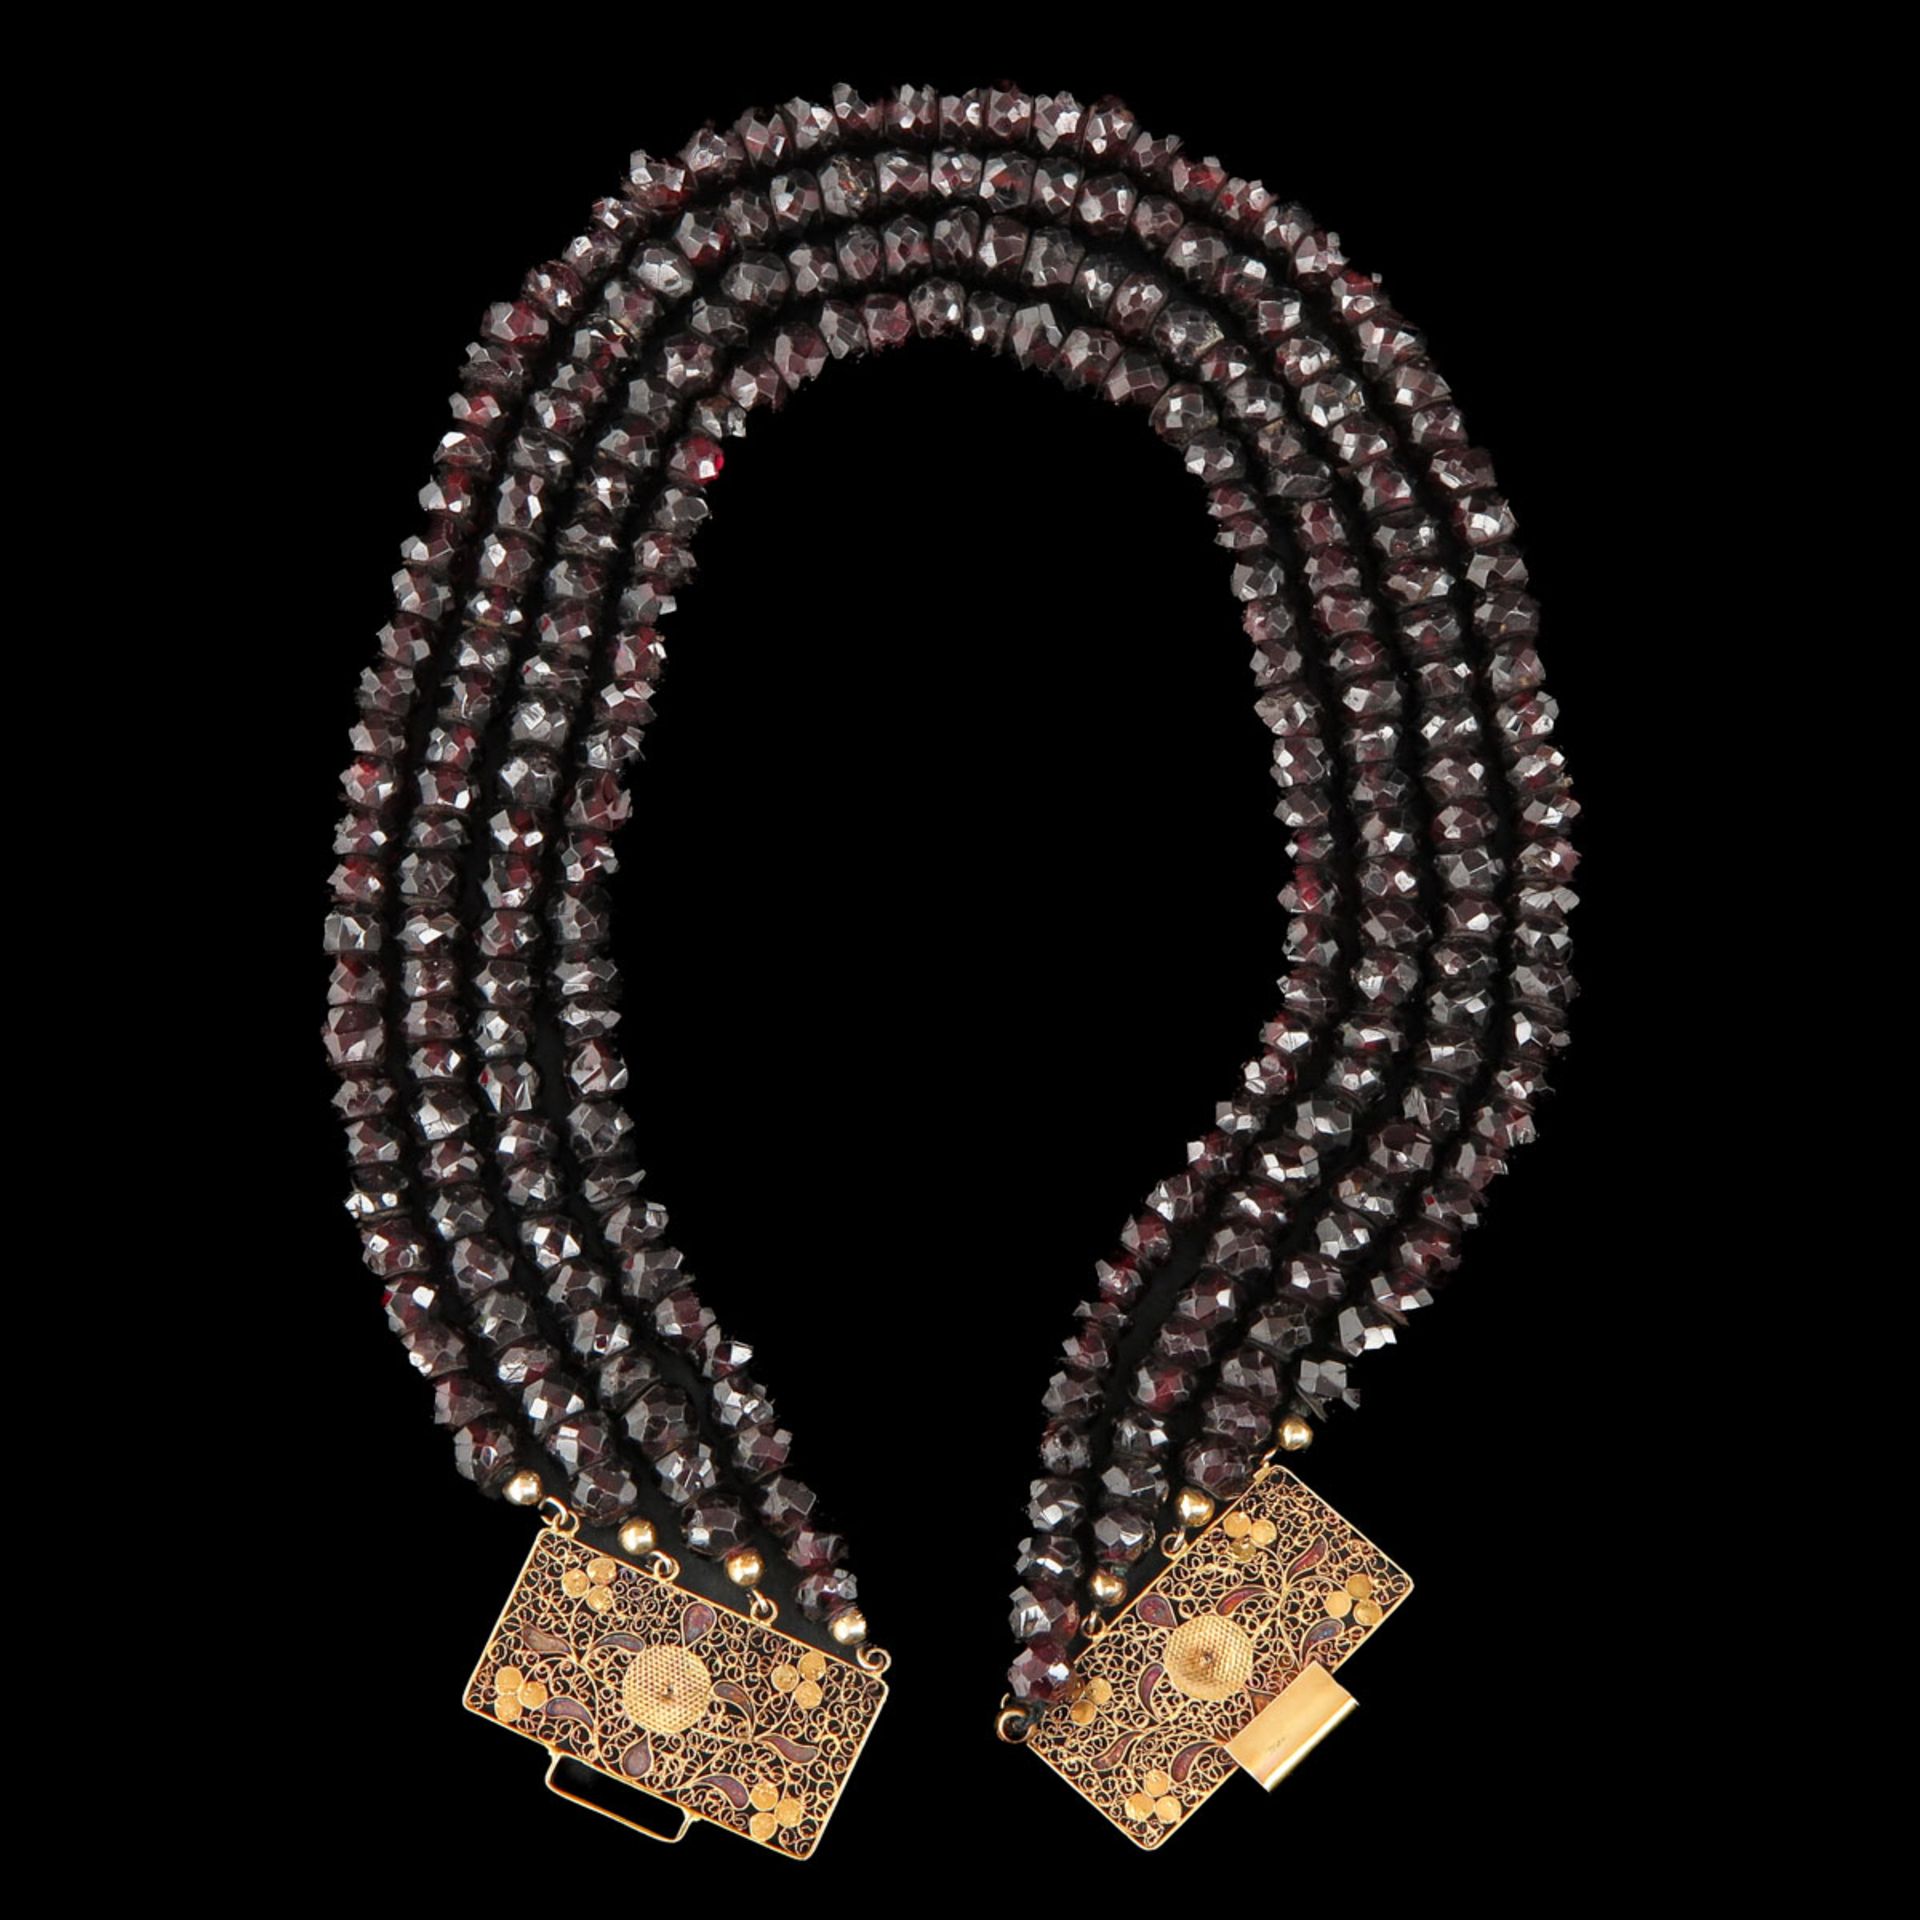 A Garnet Necklace - Image 3 of 5